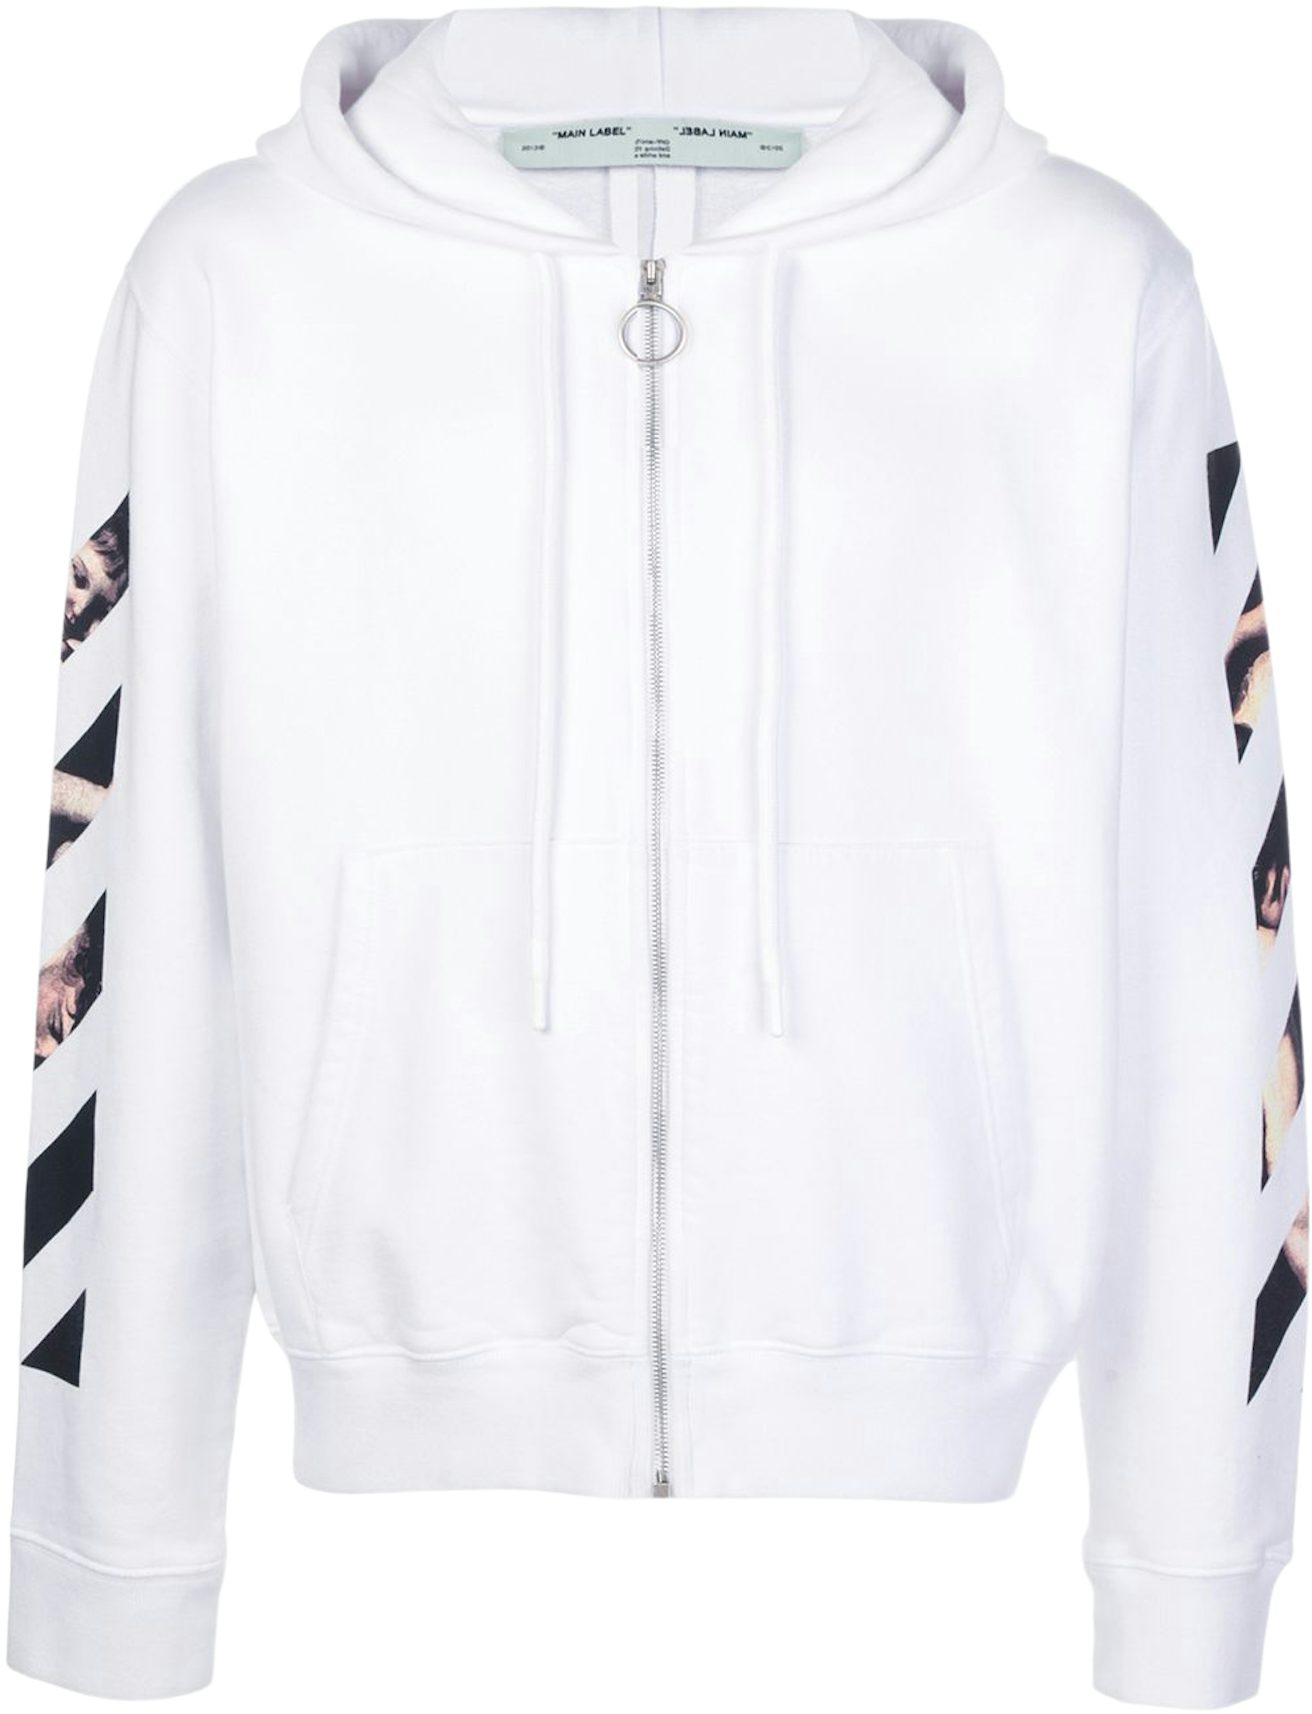 Off-White Tops/Sweatshirts Hoodies Streetwear - StockX